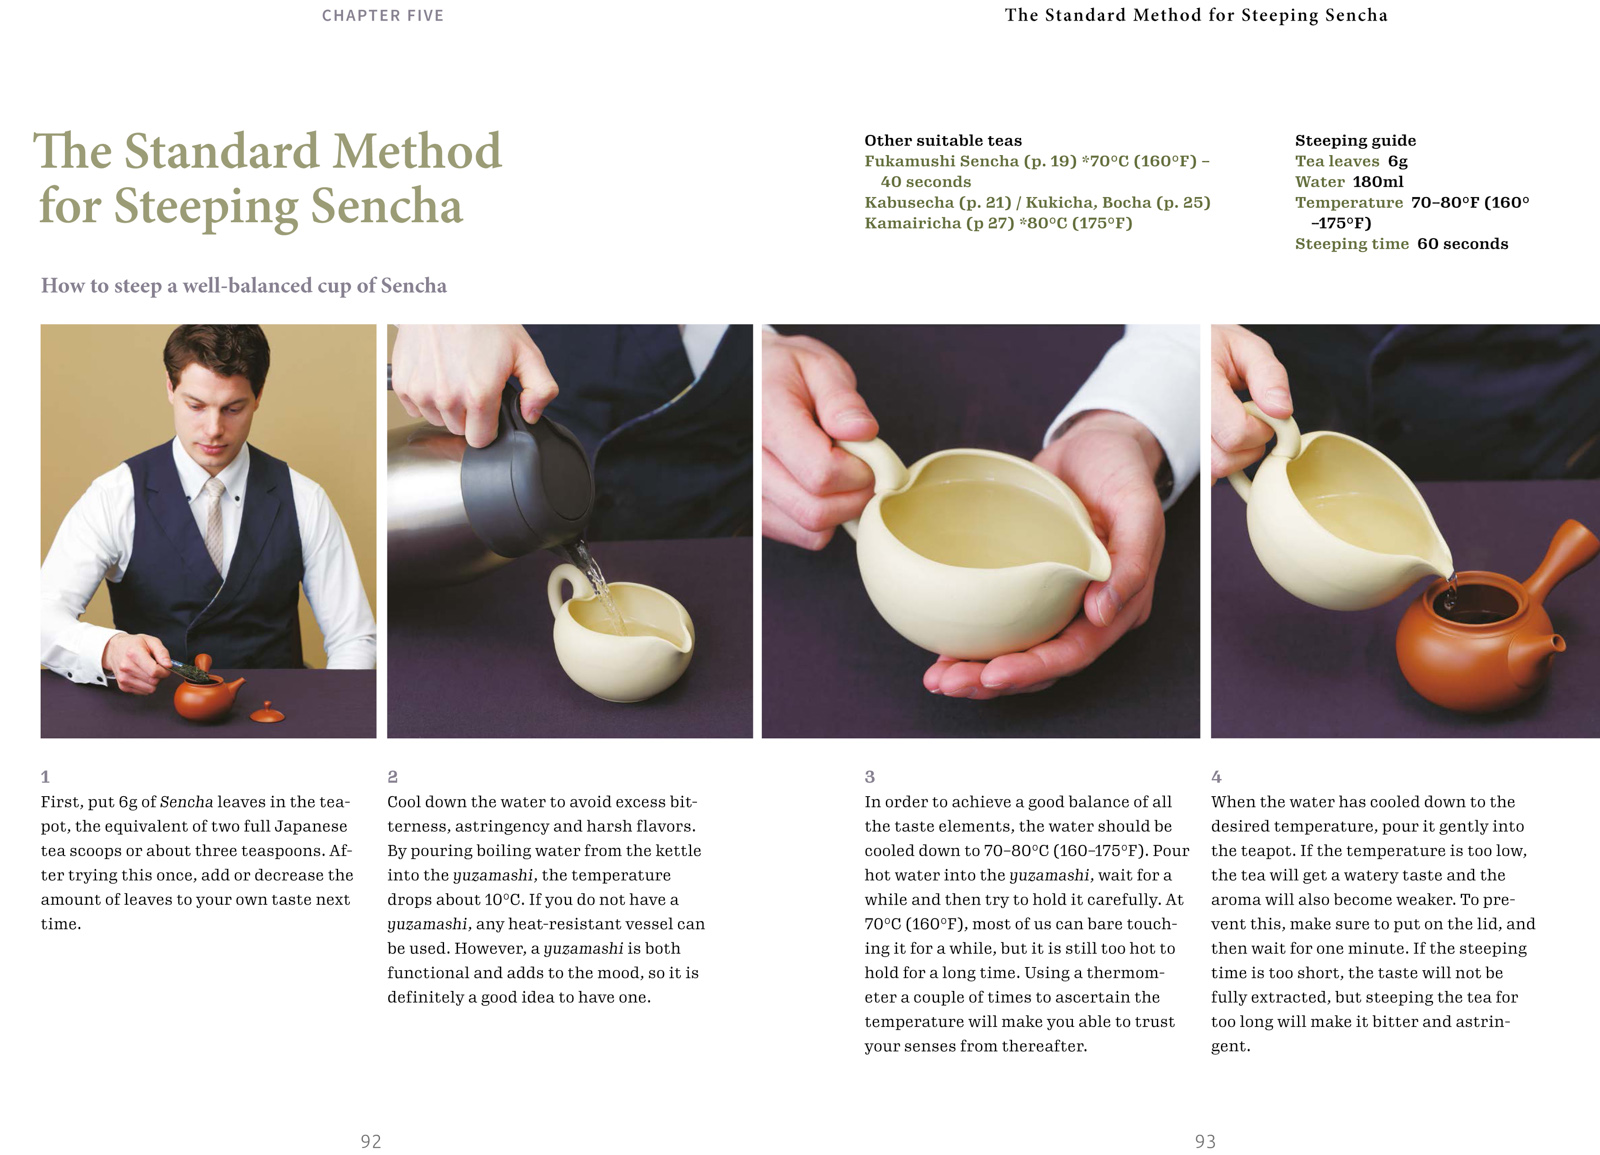 The Standard Method for Steeping Sencha (Japanese Tea)